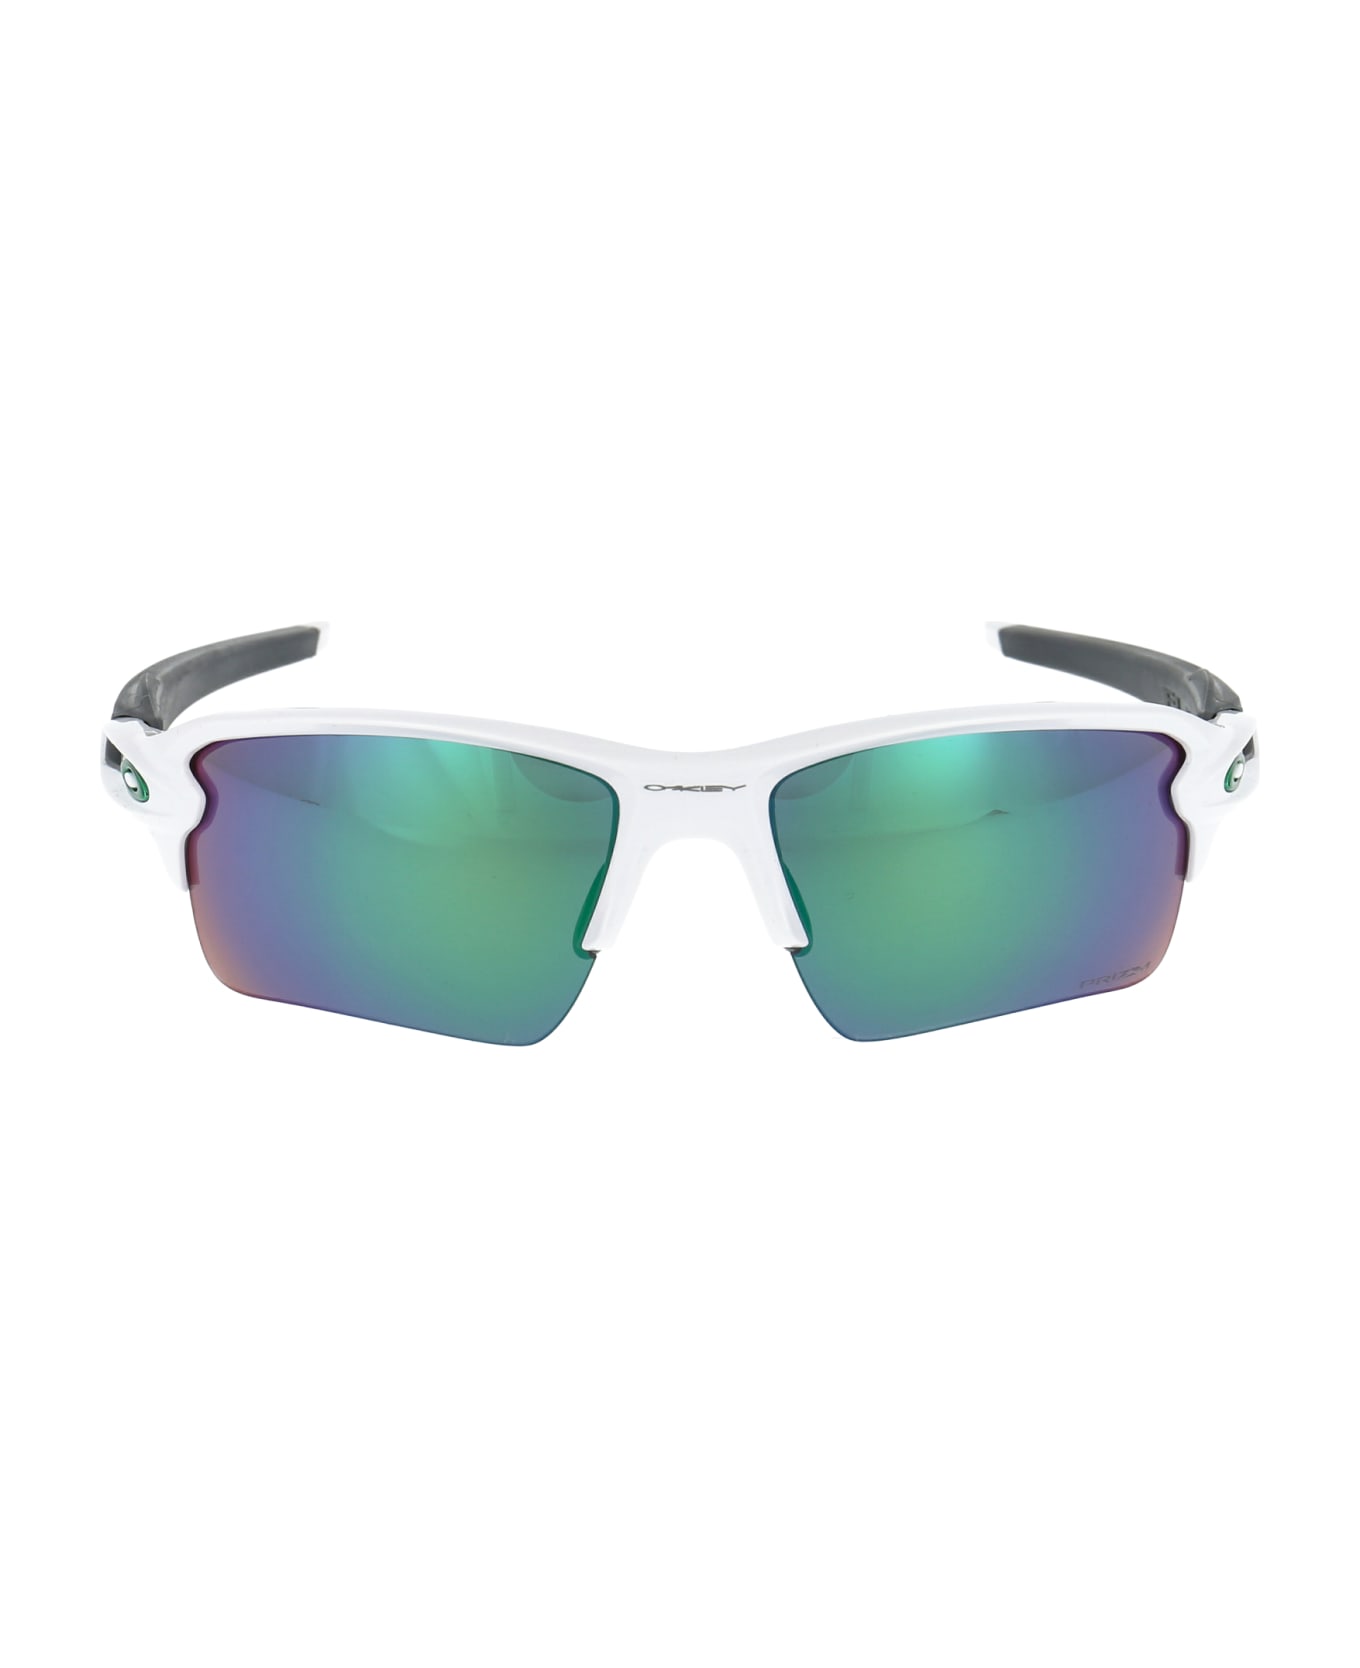 Oakley Flak 2.0 Xl Sunglasses - 918892 POLISHED WHITE サングラス